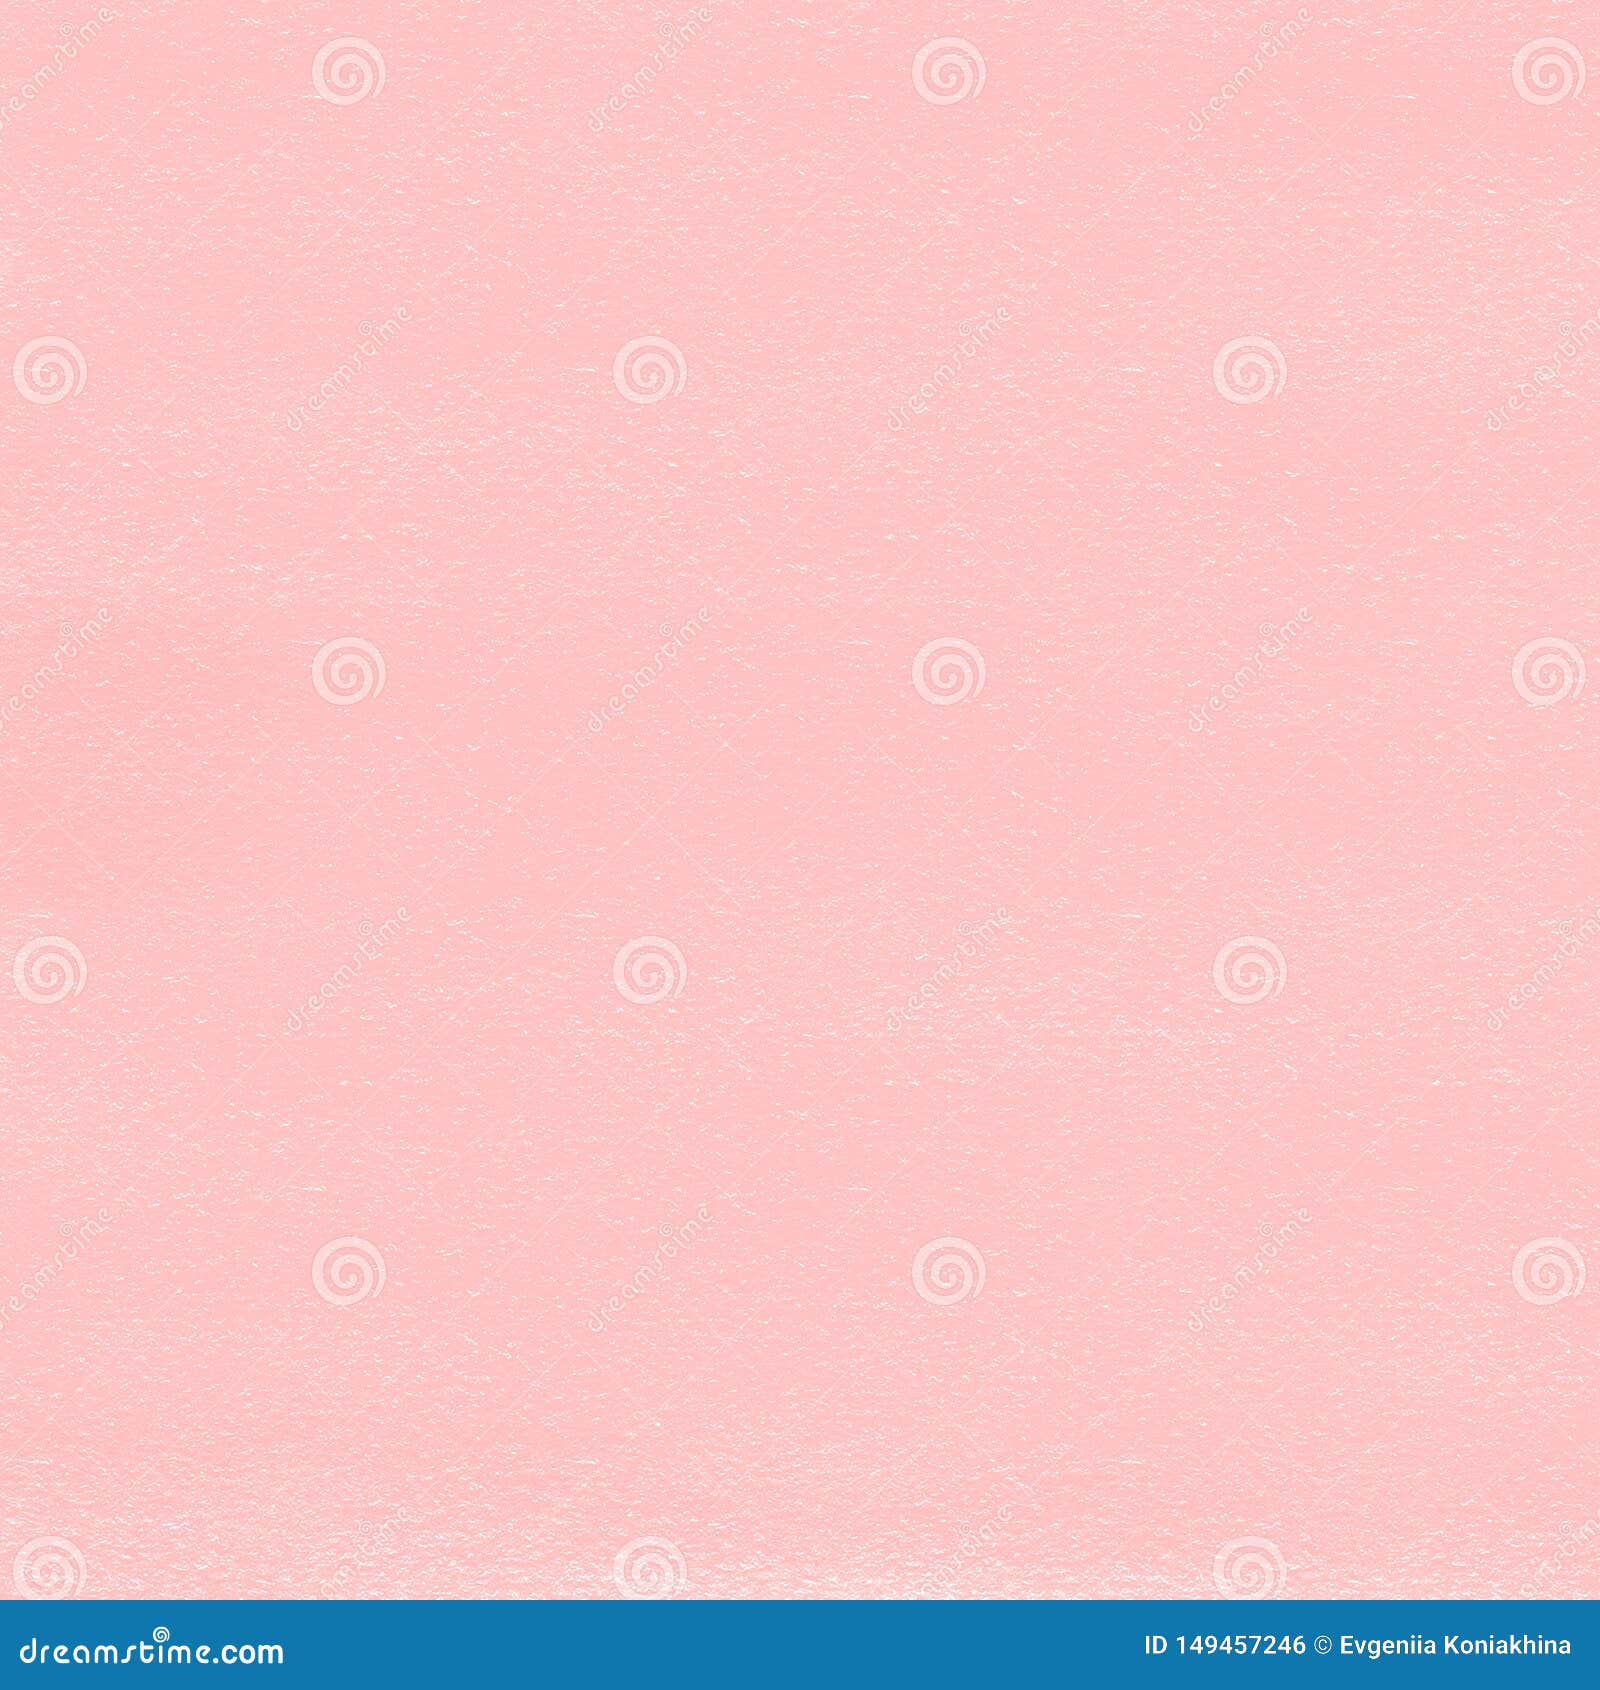 Pastel Light Pink Background with Noises Stock Illustration - Illustration  of backdrop, blur: 149457246